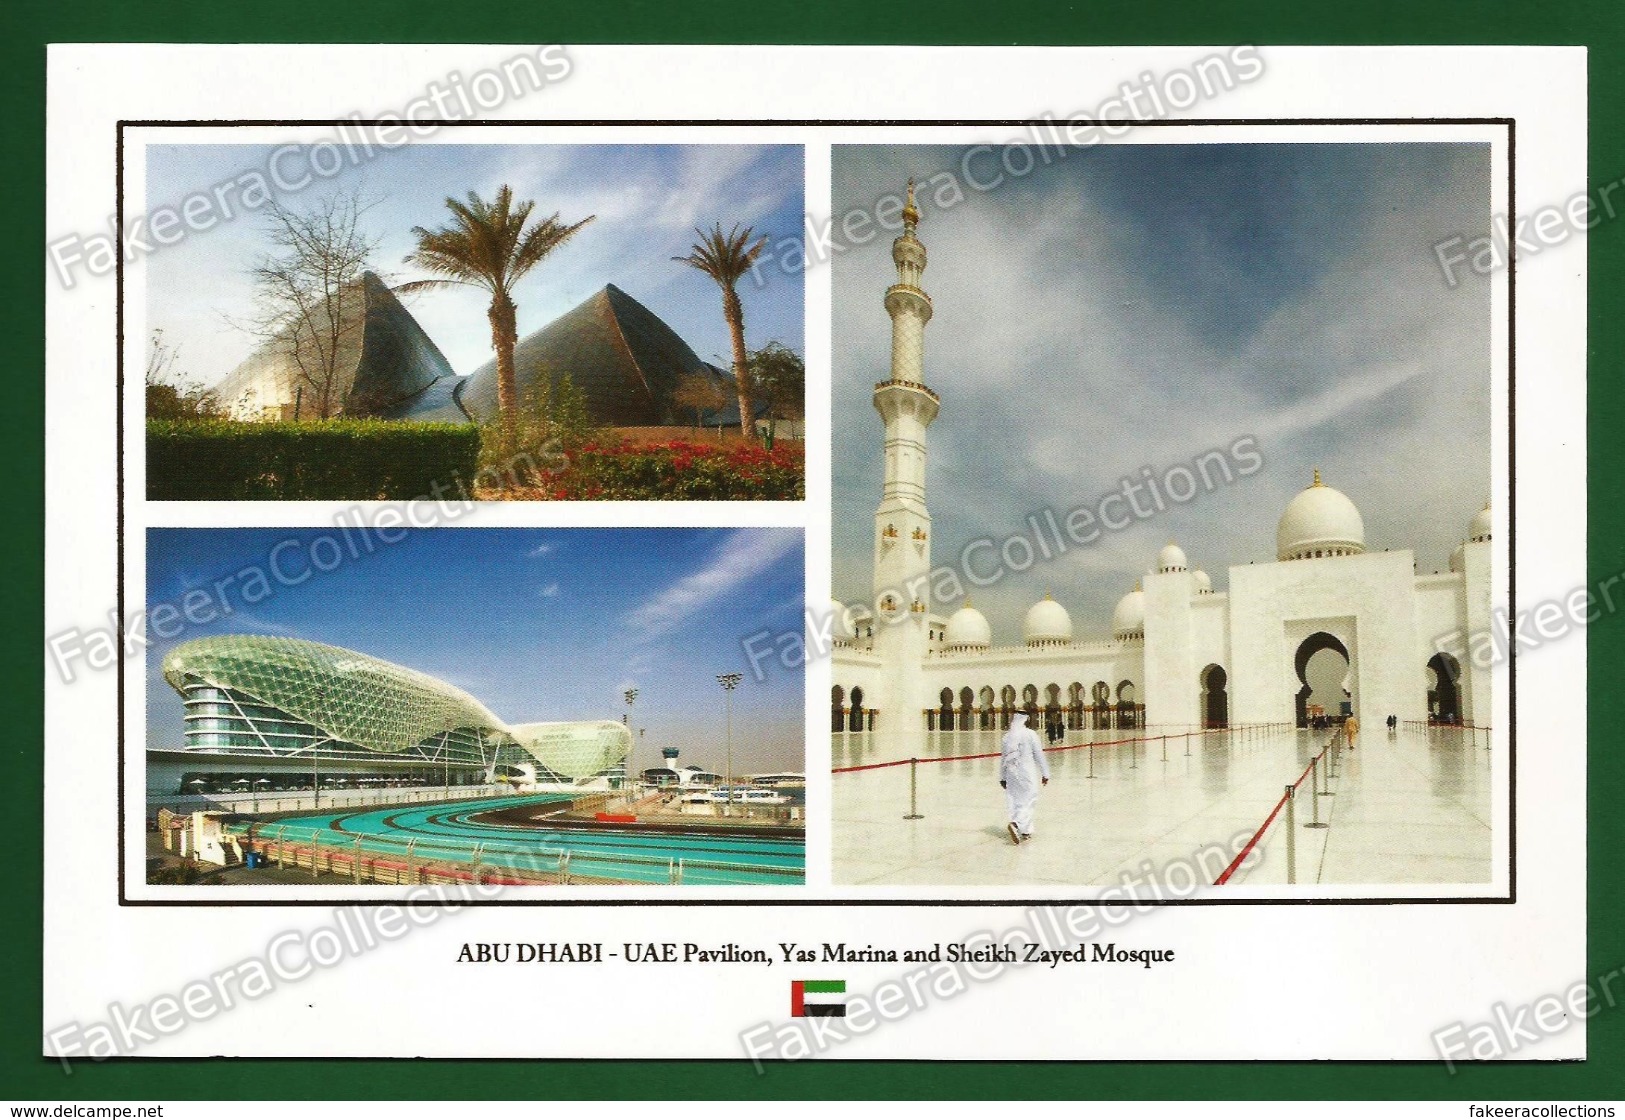 UNITED ARAB EMIRATES / UAE - ABU DHABI Pavilion, Yas Marina And Sheikh Zayed Mosque - Postcard # 48 - Unused As Scan - Verenigde Arabische Emiraten